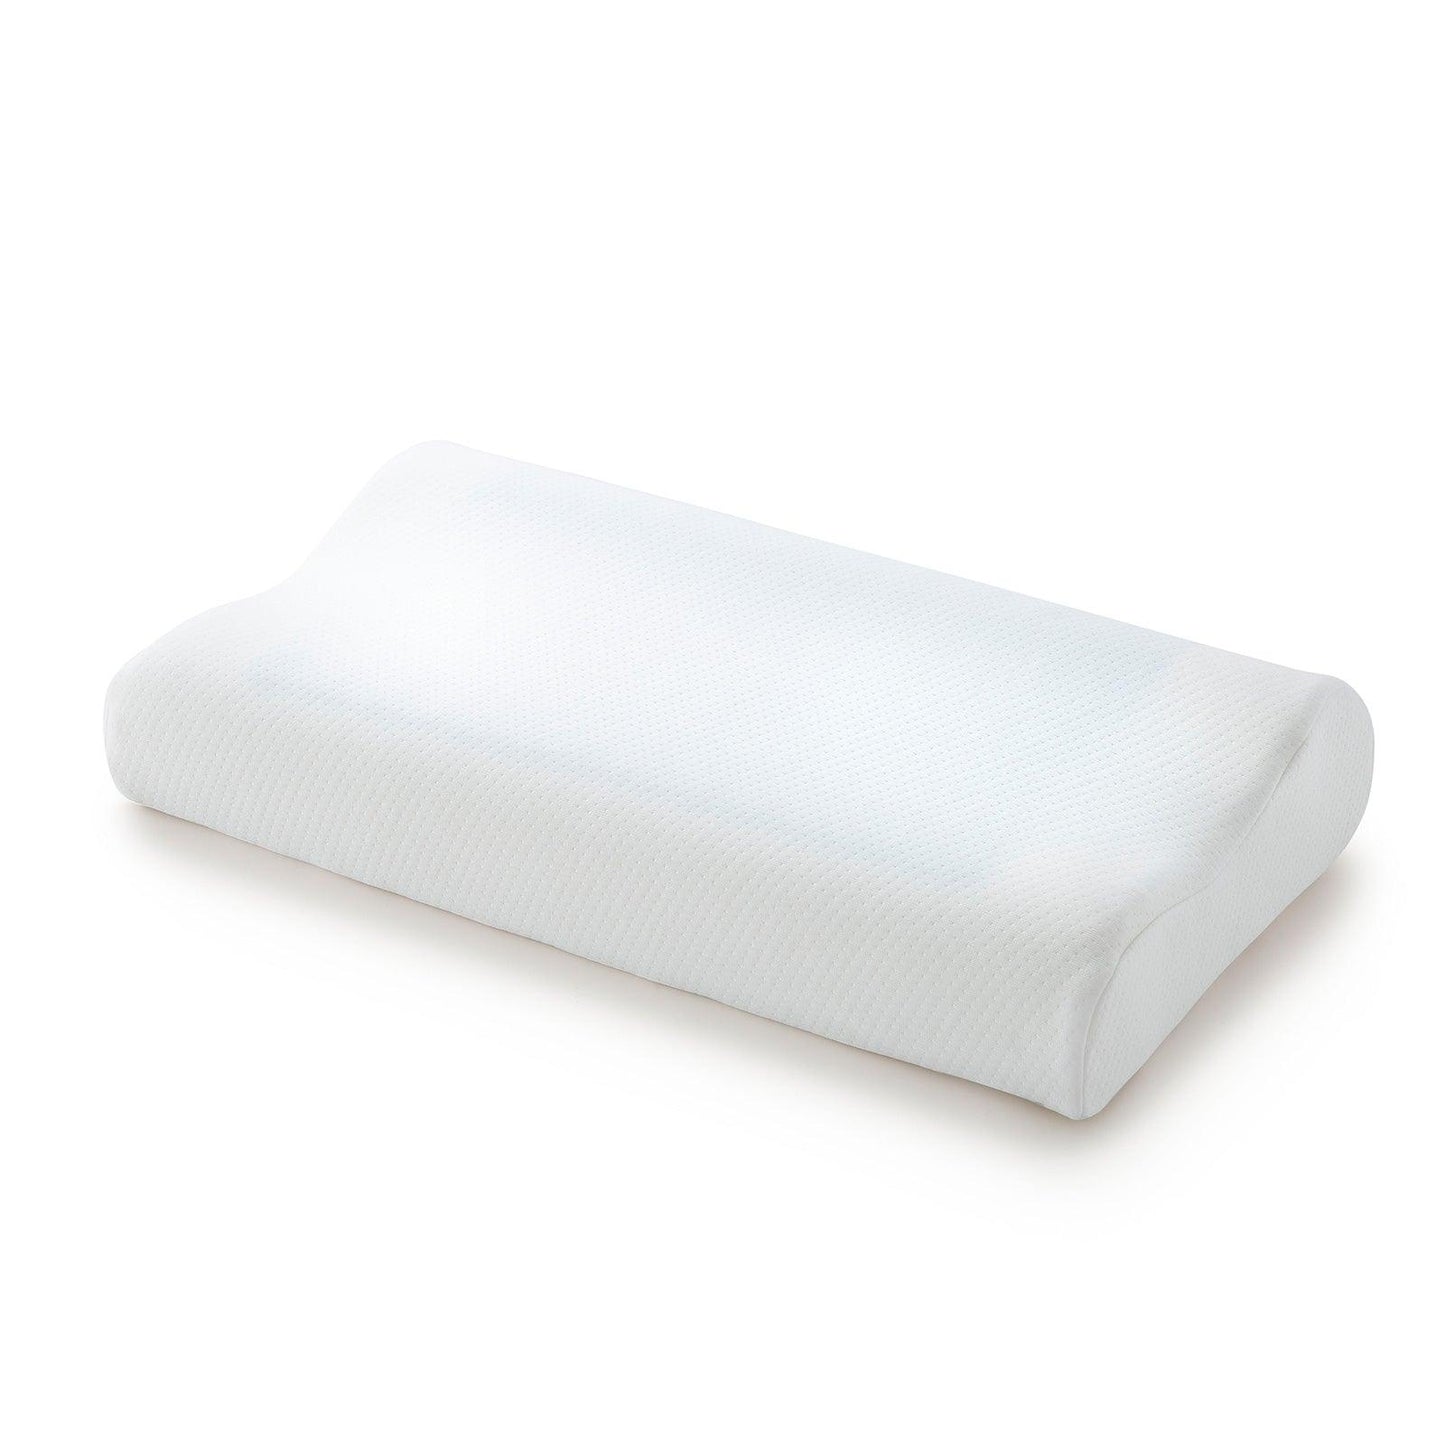 Royal Comfort Cooling Gel Contour High Density Memory Foam Pillow Single Pack